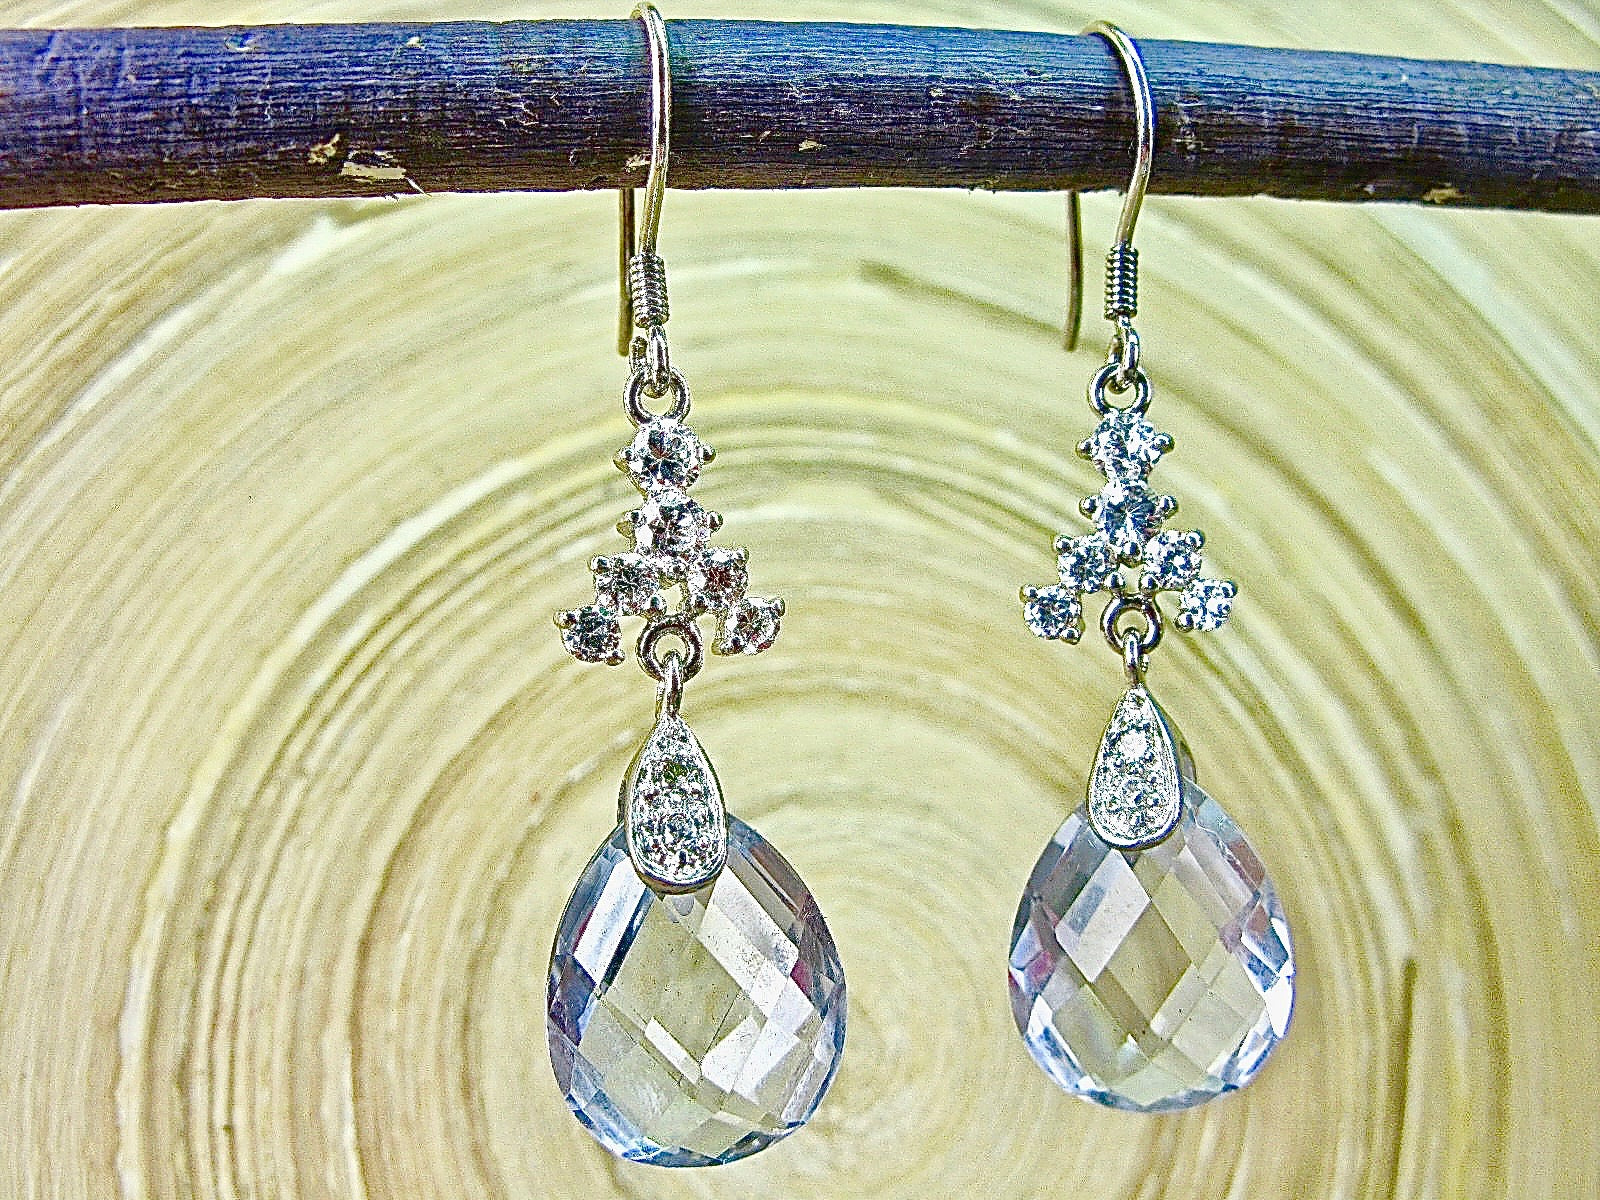 Blue Crystal Pear Shaped Dangle 925 Sterling Silver Earrings